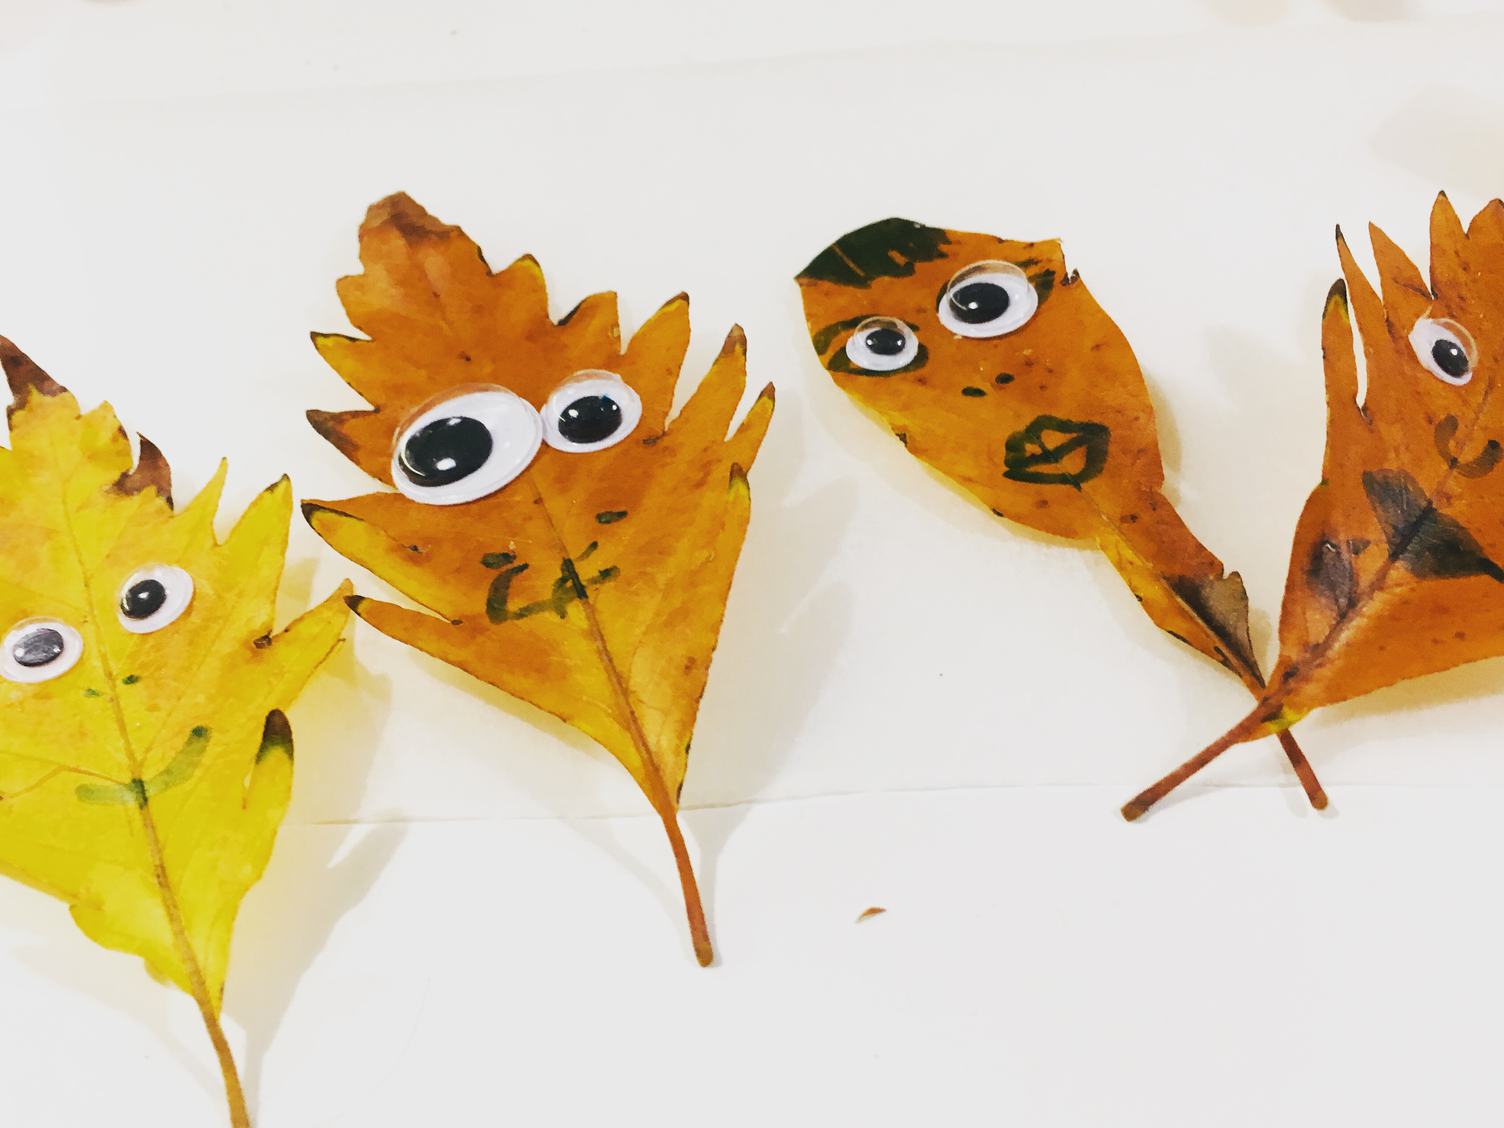 Leaves Faces - Super Easy Crafts for Children